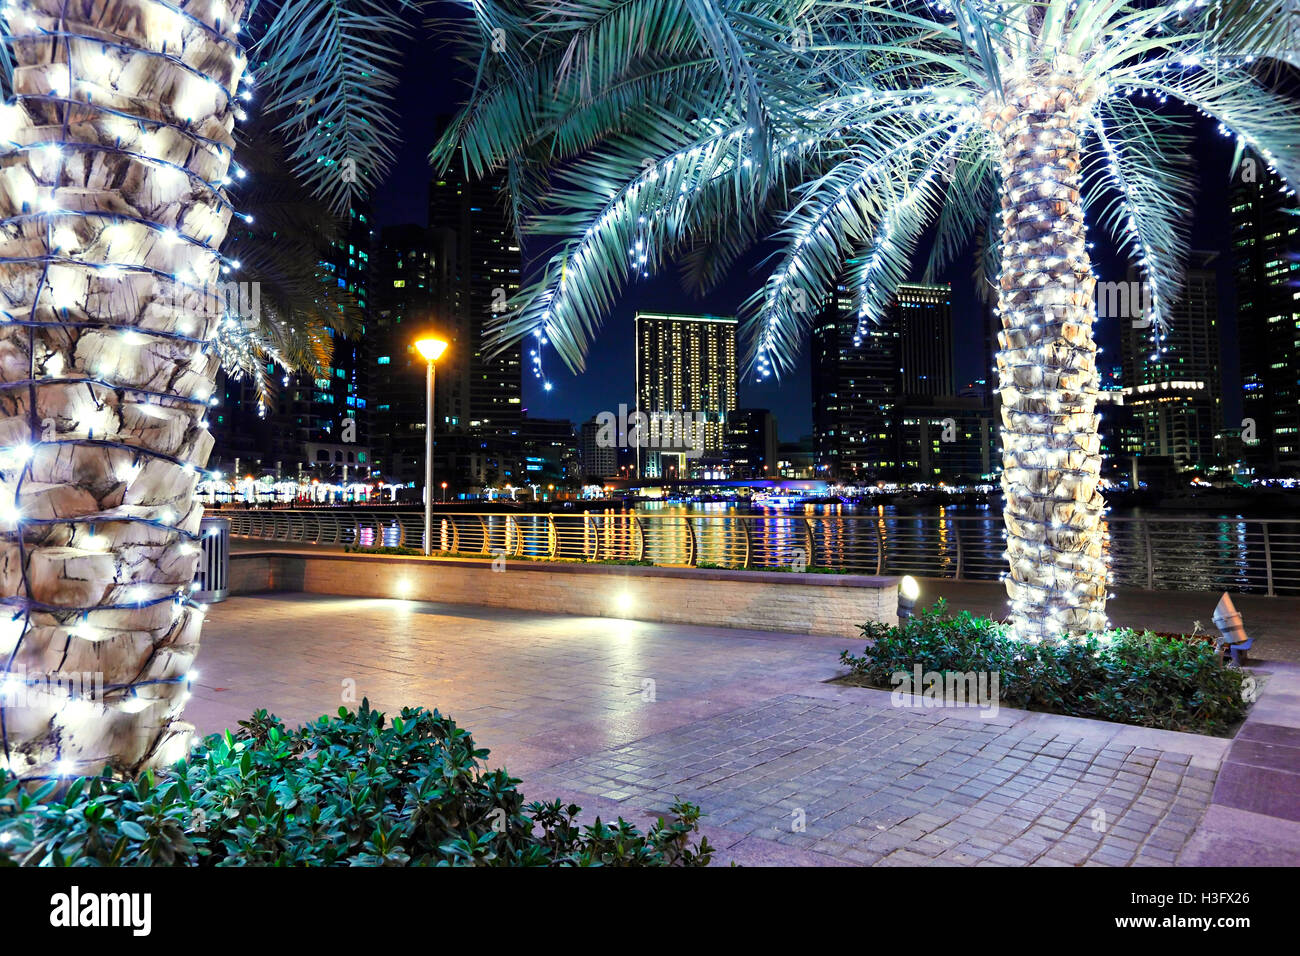 Decorated and illuminated palms in the night in Dubai Marina Stock Photo